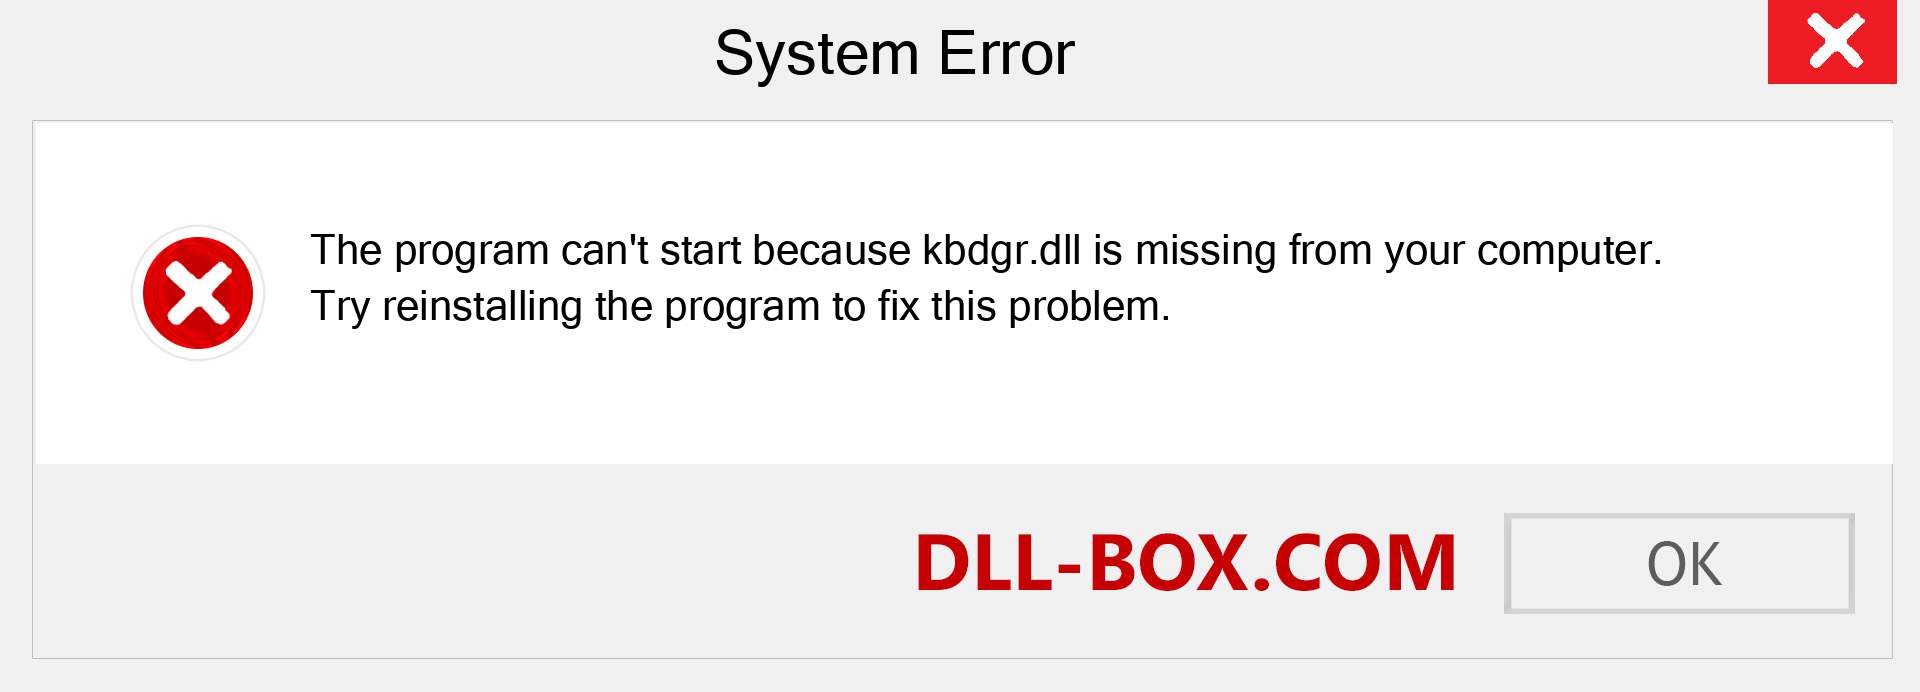  kbdgr.dll file is missing?. Download for Windows 7, 8, 10 - Fix  kbdgr dll Missing Error on Windows, photos, images